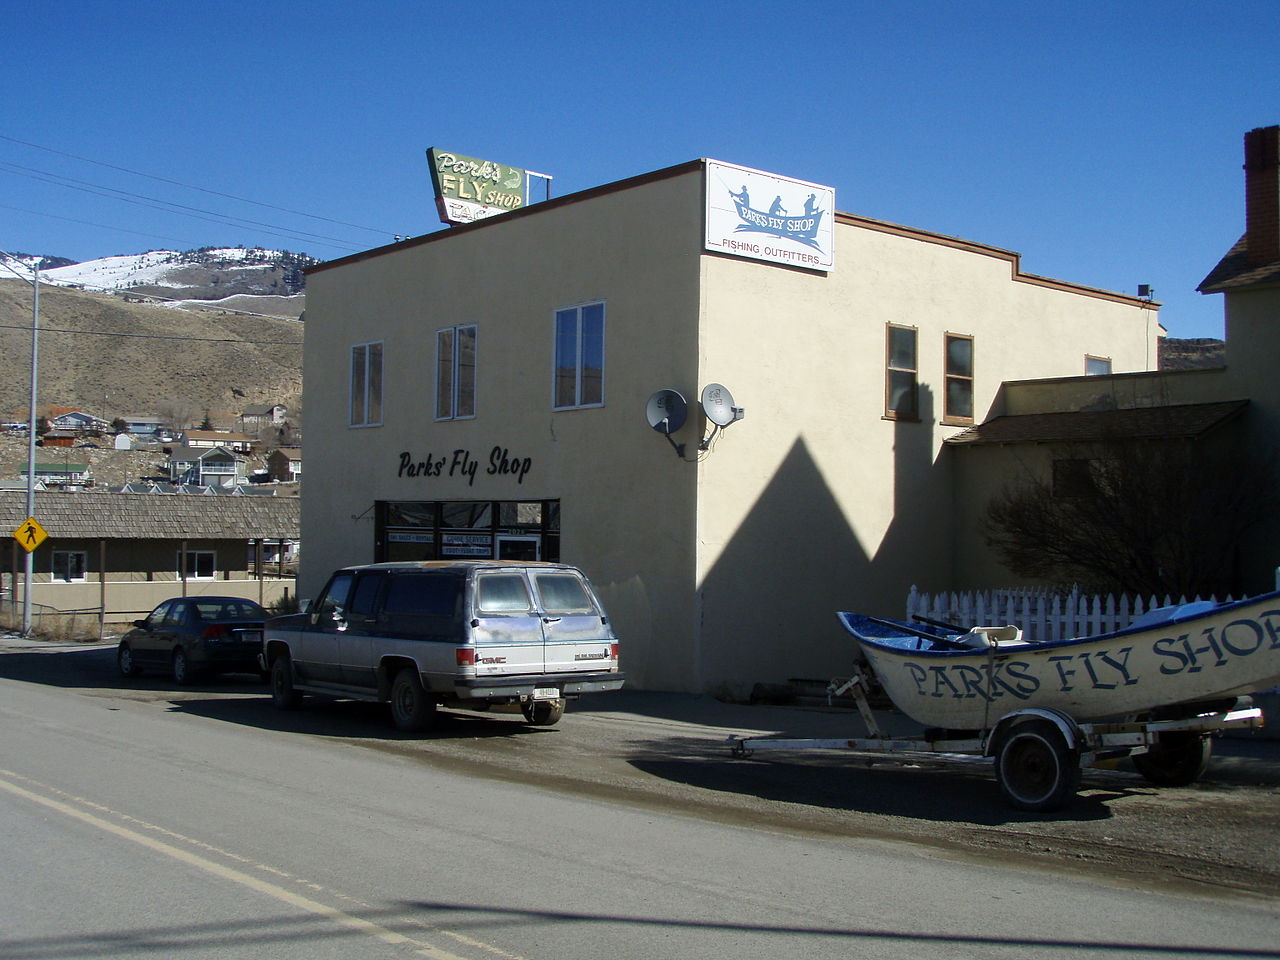 Parks' Fly Shop in Gardiner Montana